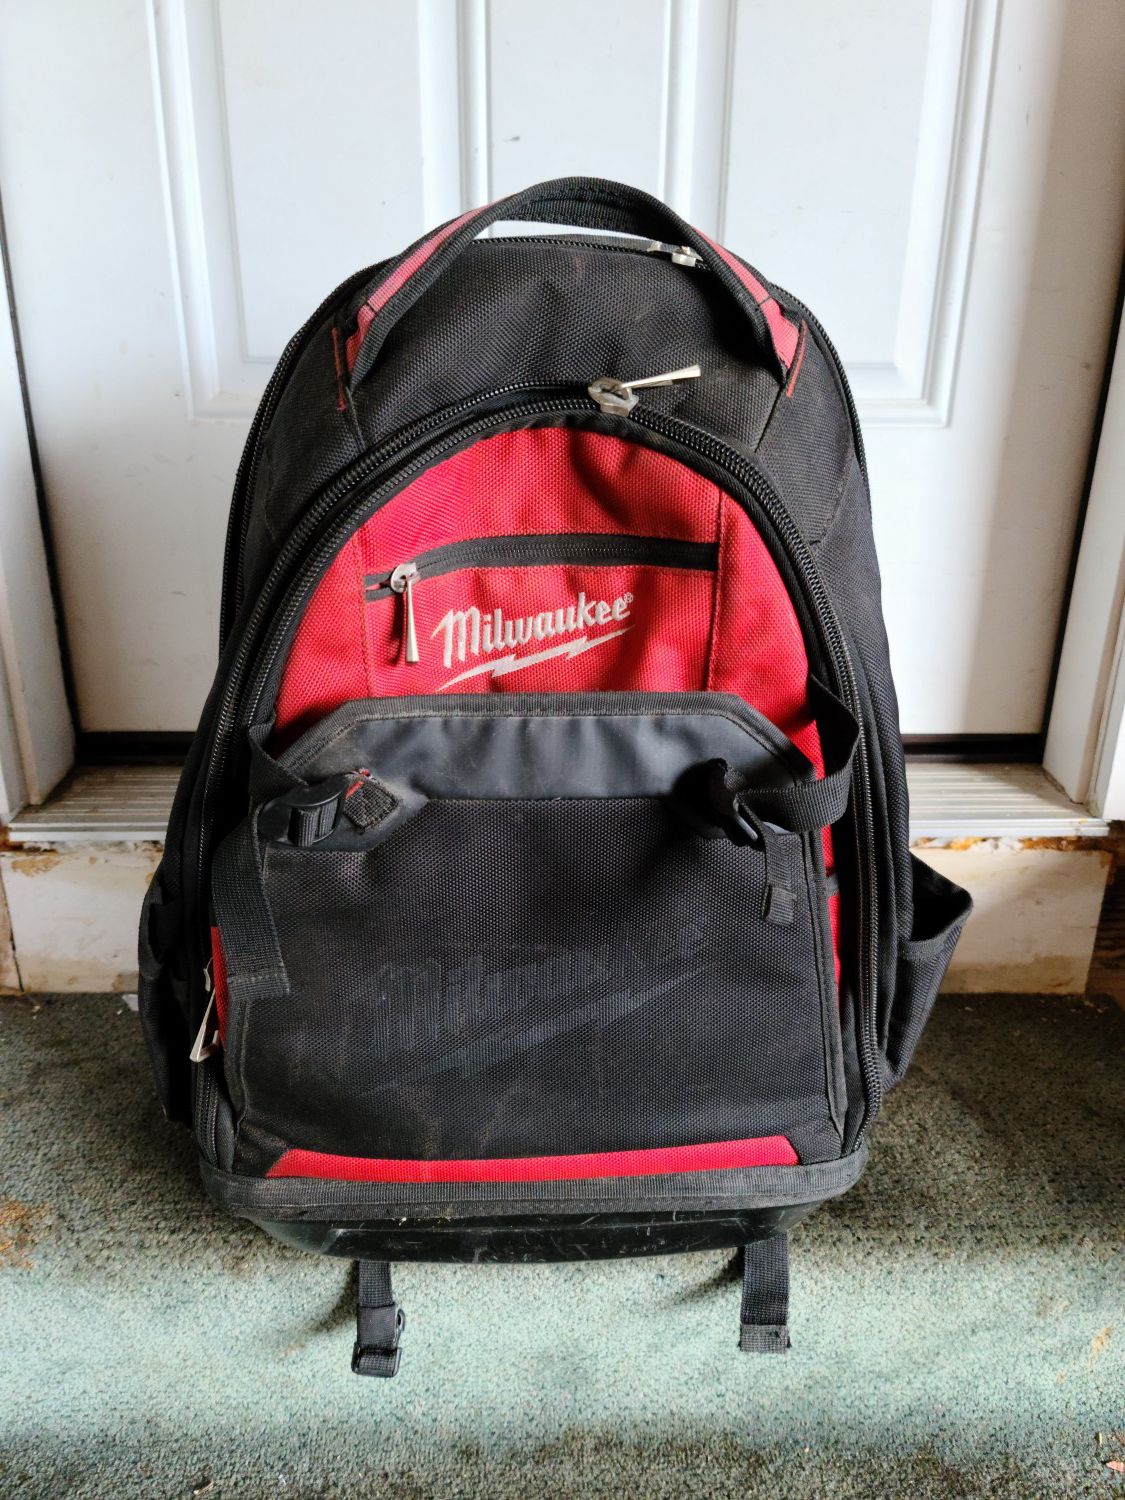 Milwaukee tool backpack